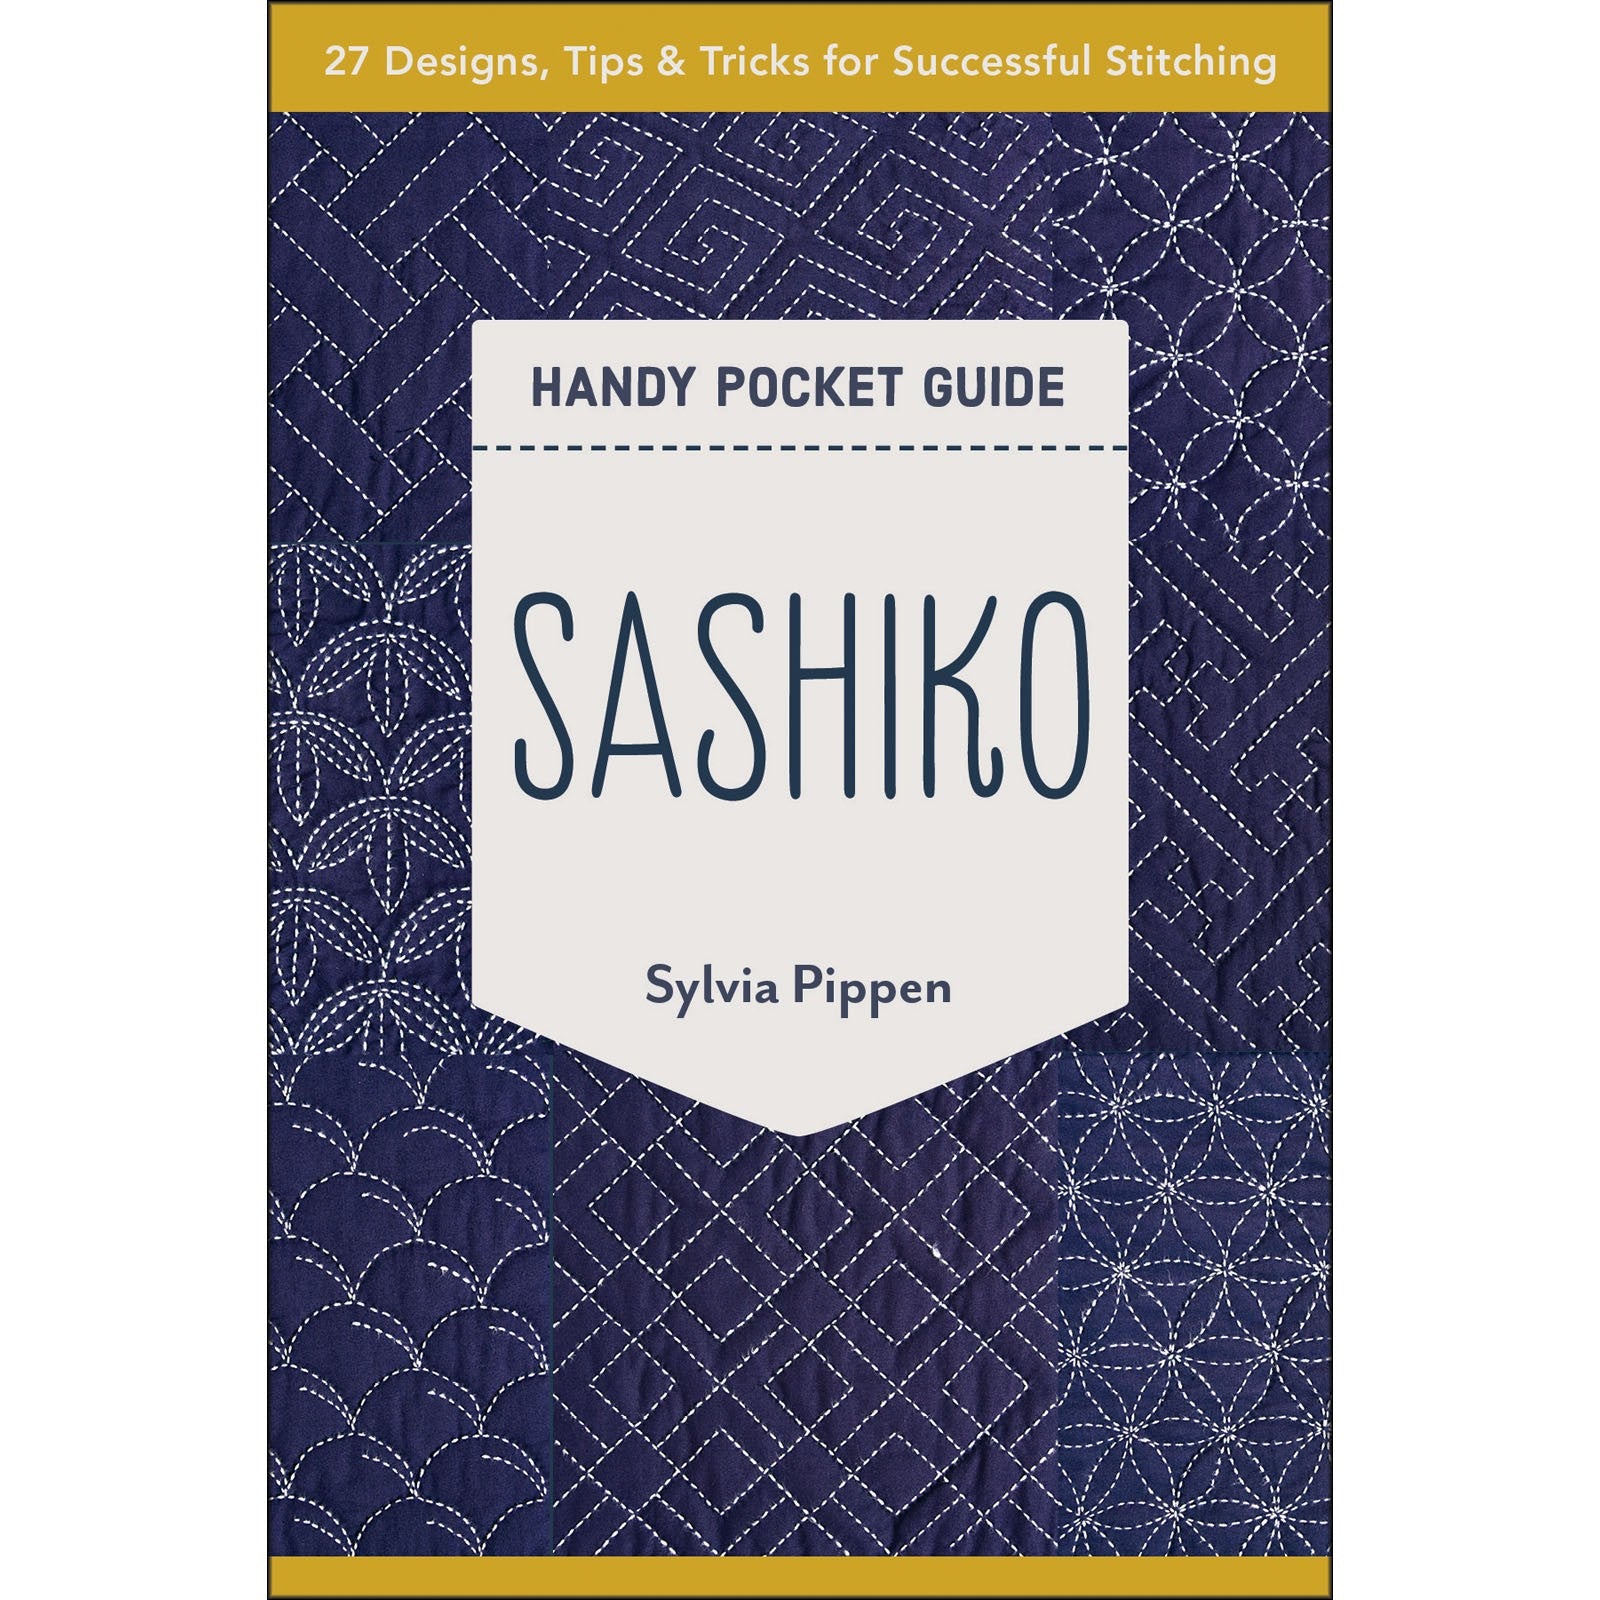 Sashiko Handy Pocket Guide by Sylvia Pippen